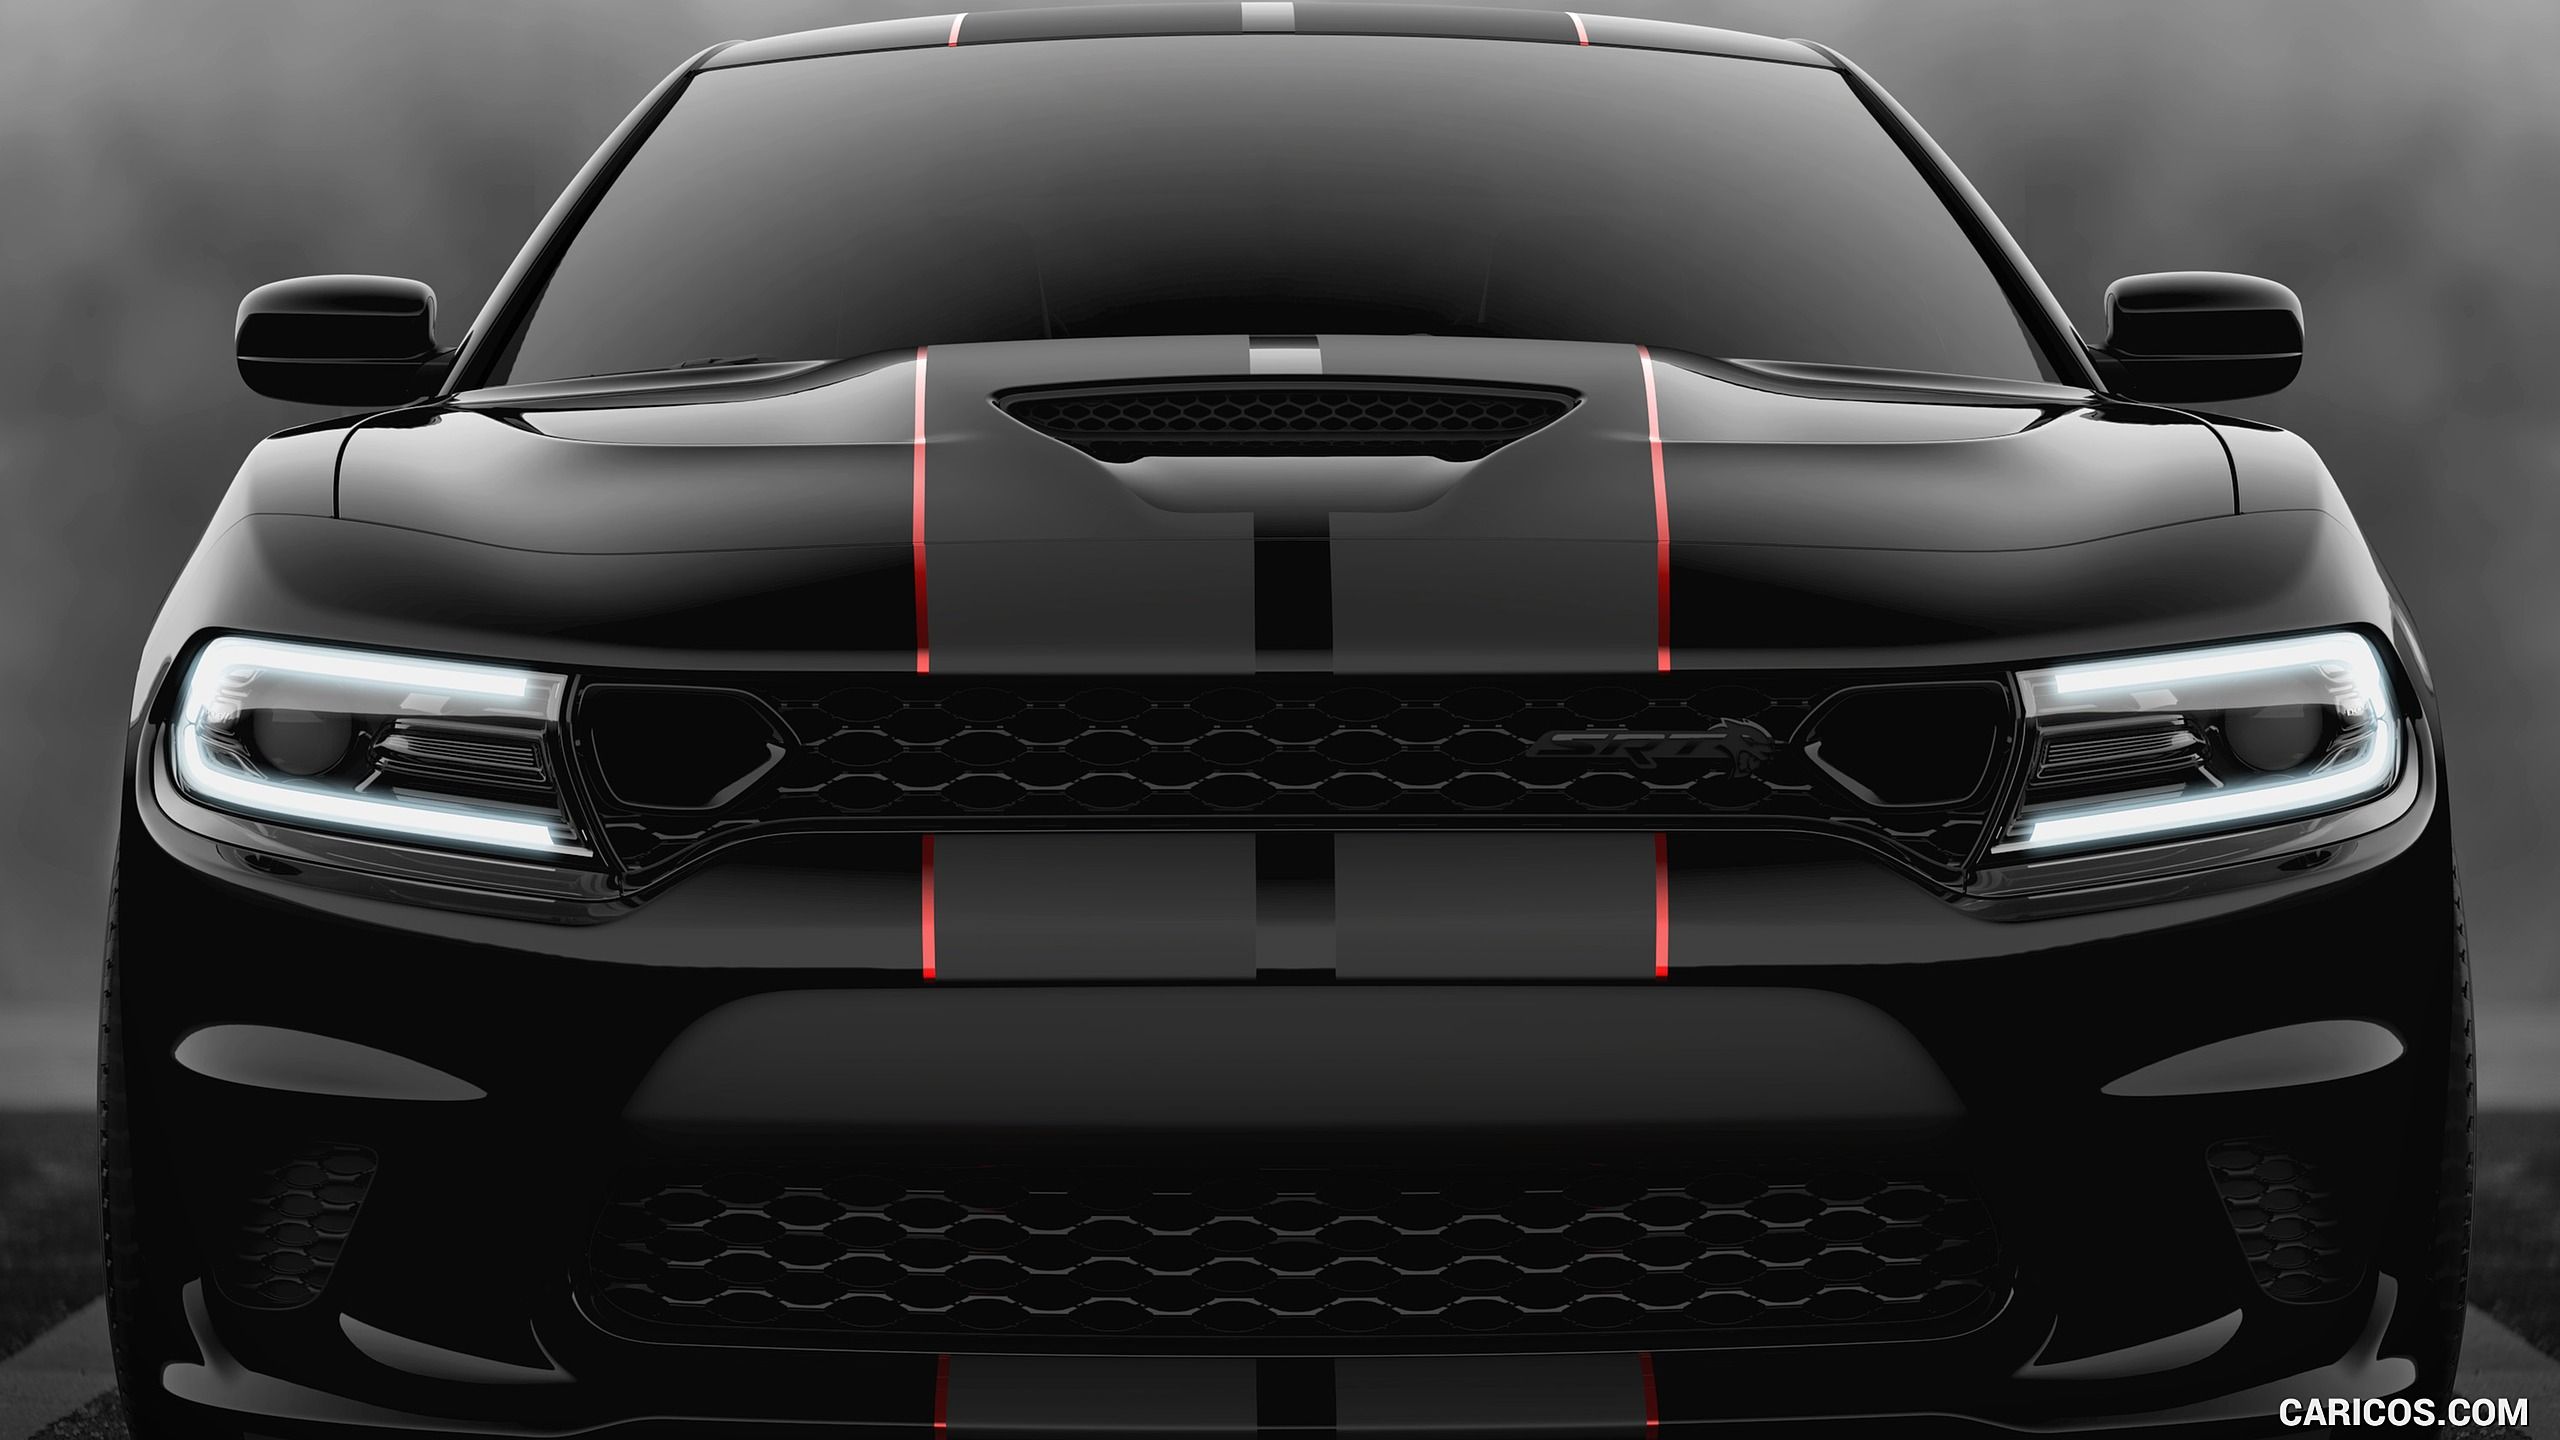 Dodge Charger SRT Hellcat Octane Edition (Color: Pitch Black). HD Wallpaper